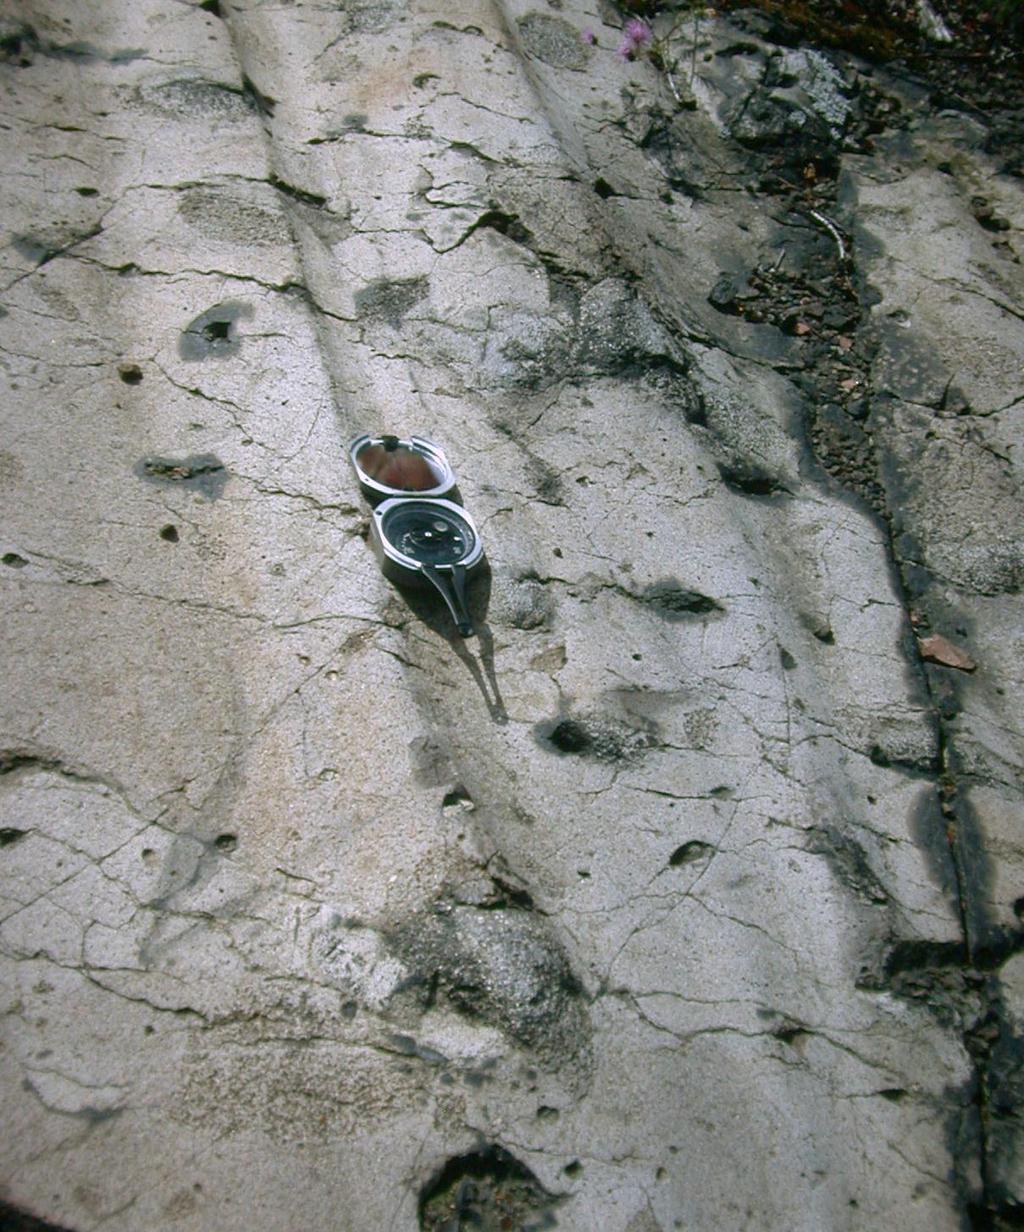 Glacial striations (grooves) in limestone bedrock,